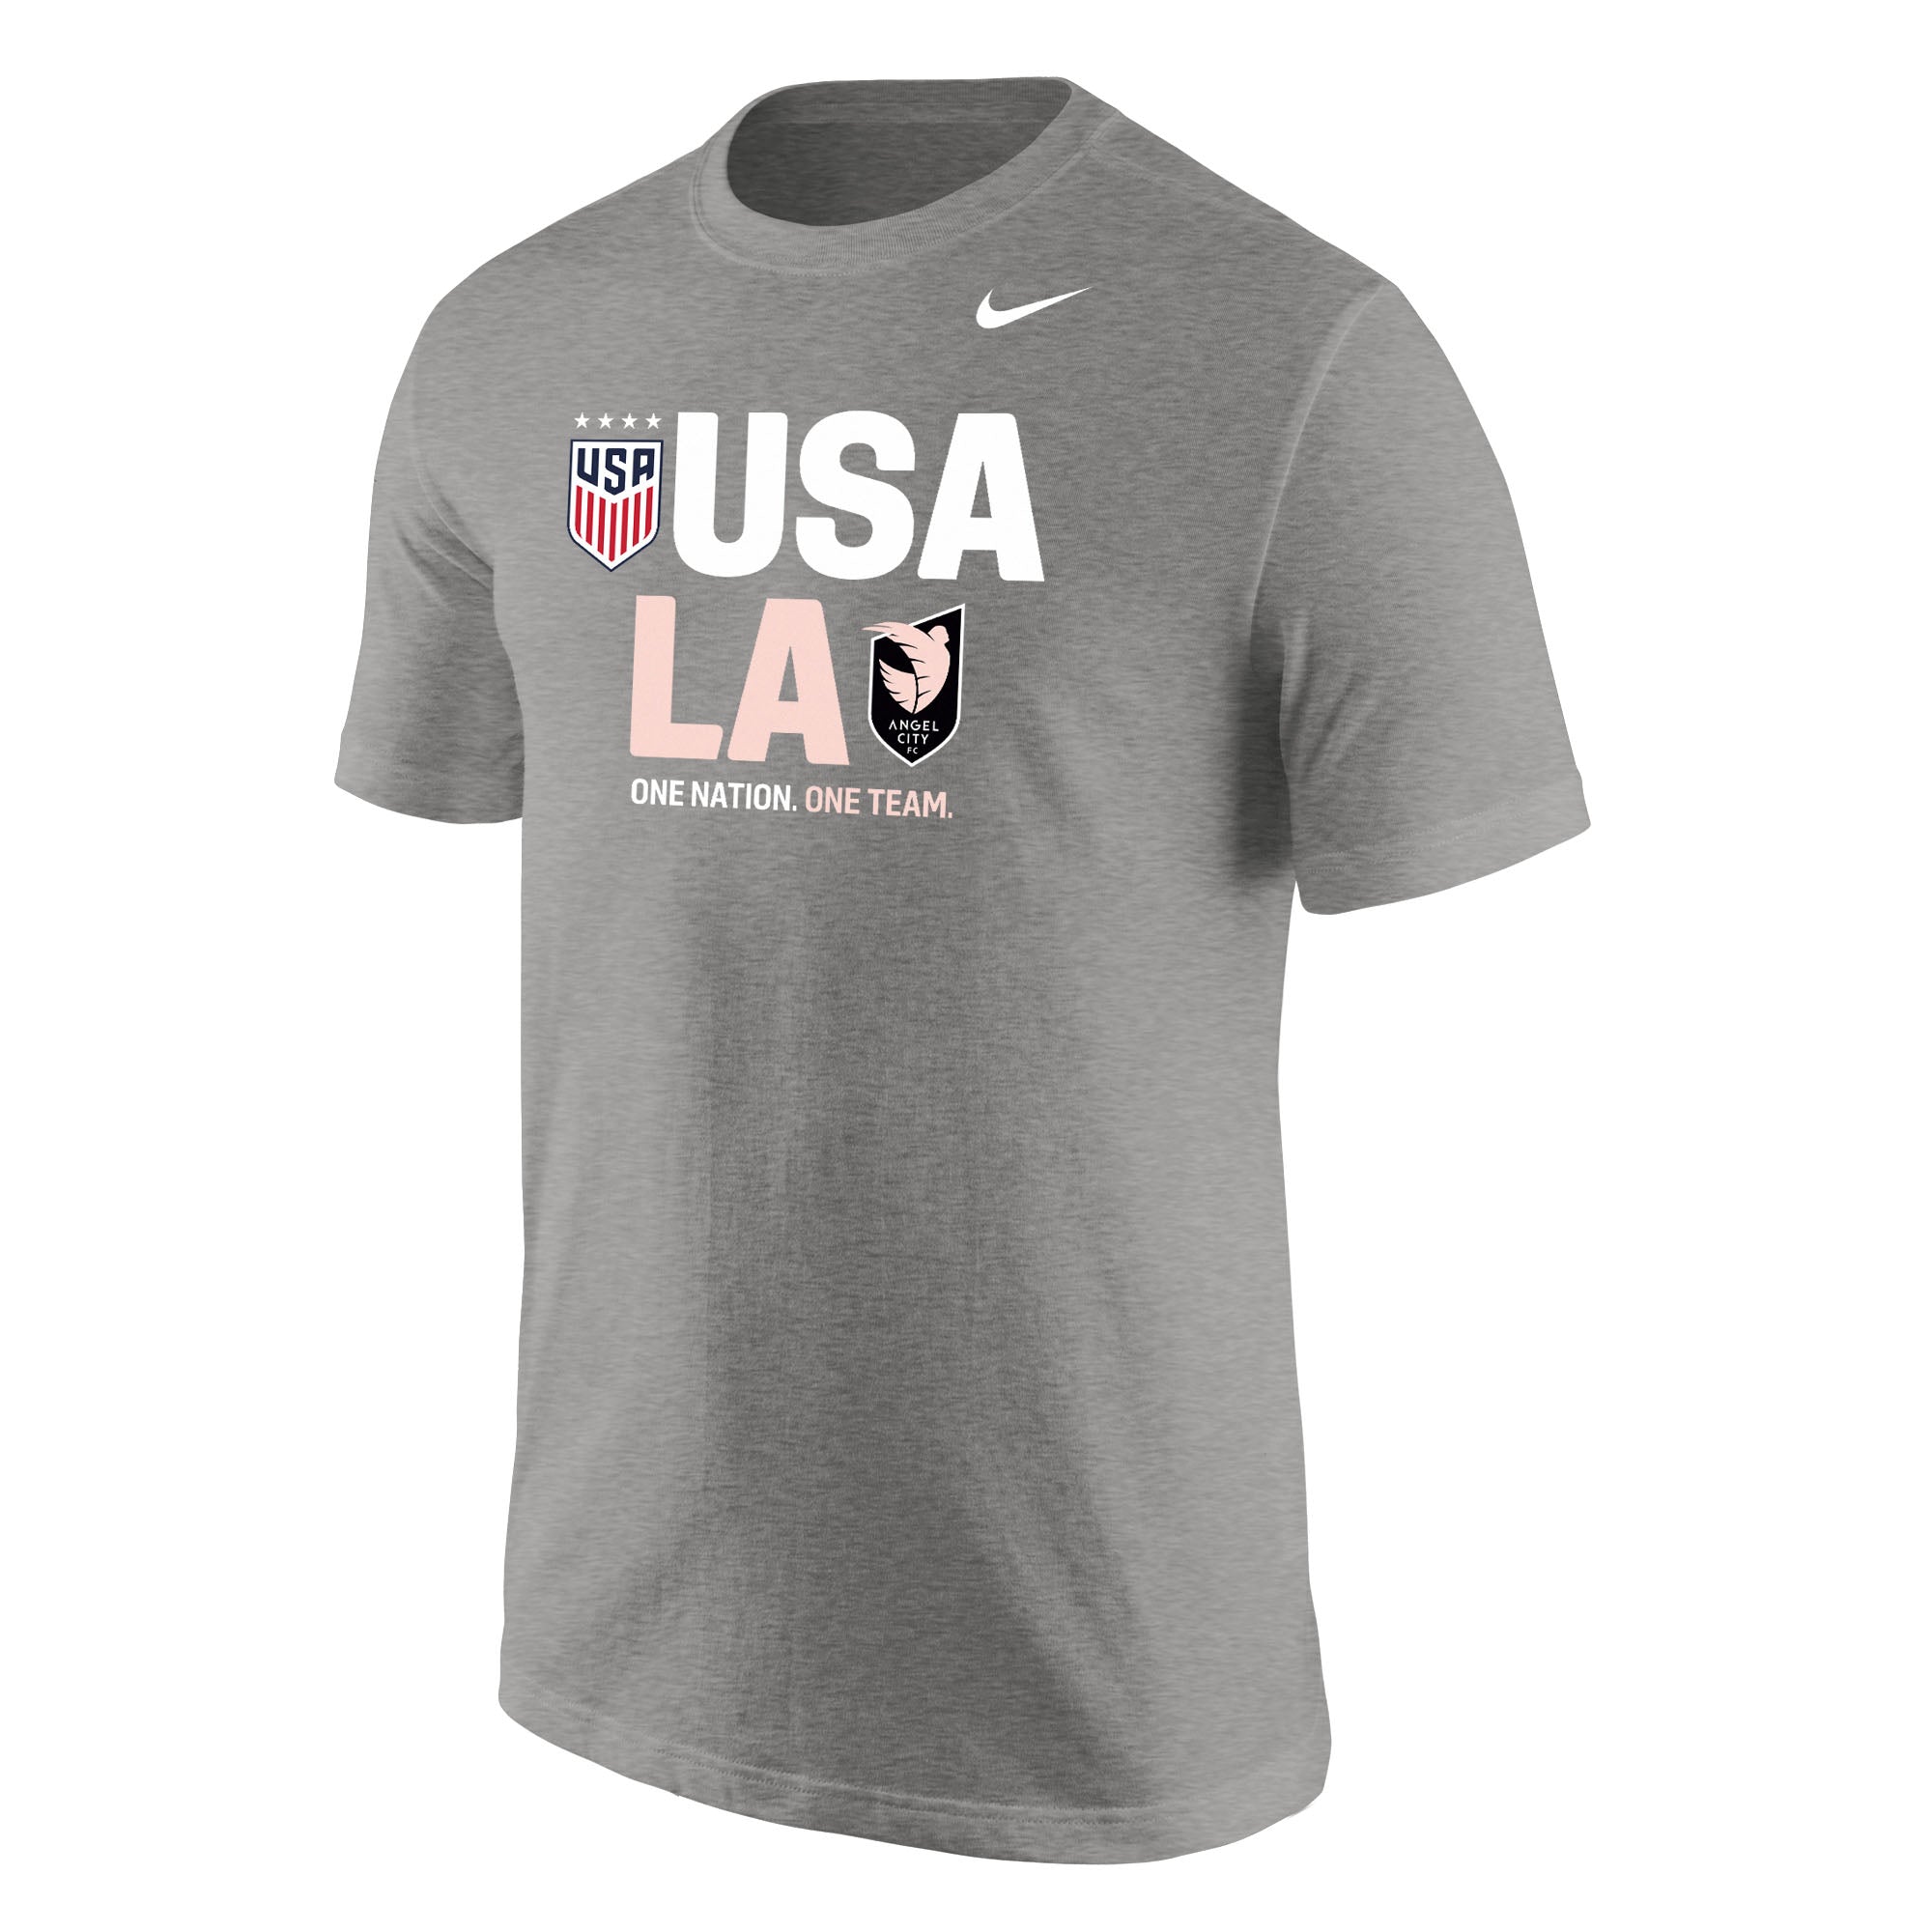 Angel City FC x USWNT Nike Unisex USA LA T-Shirt